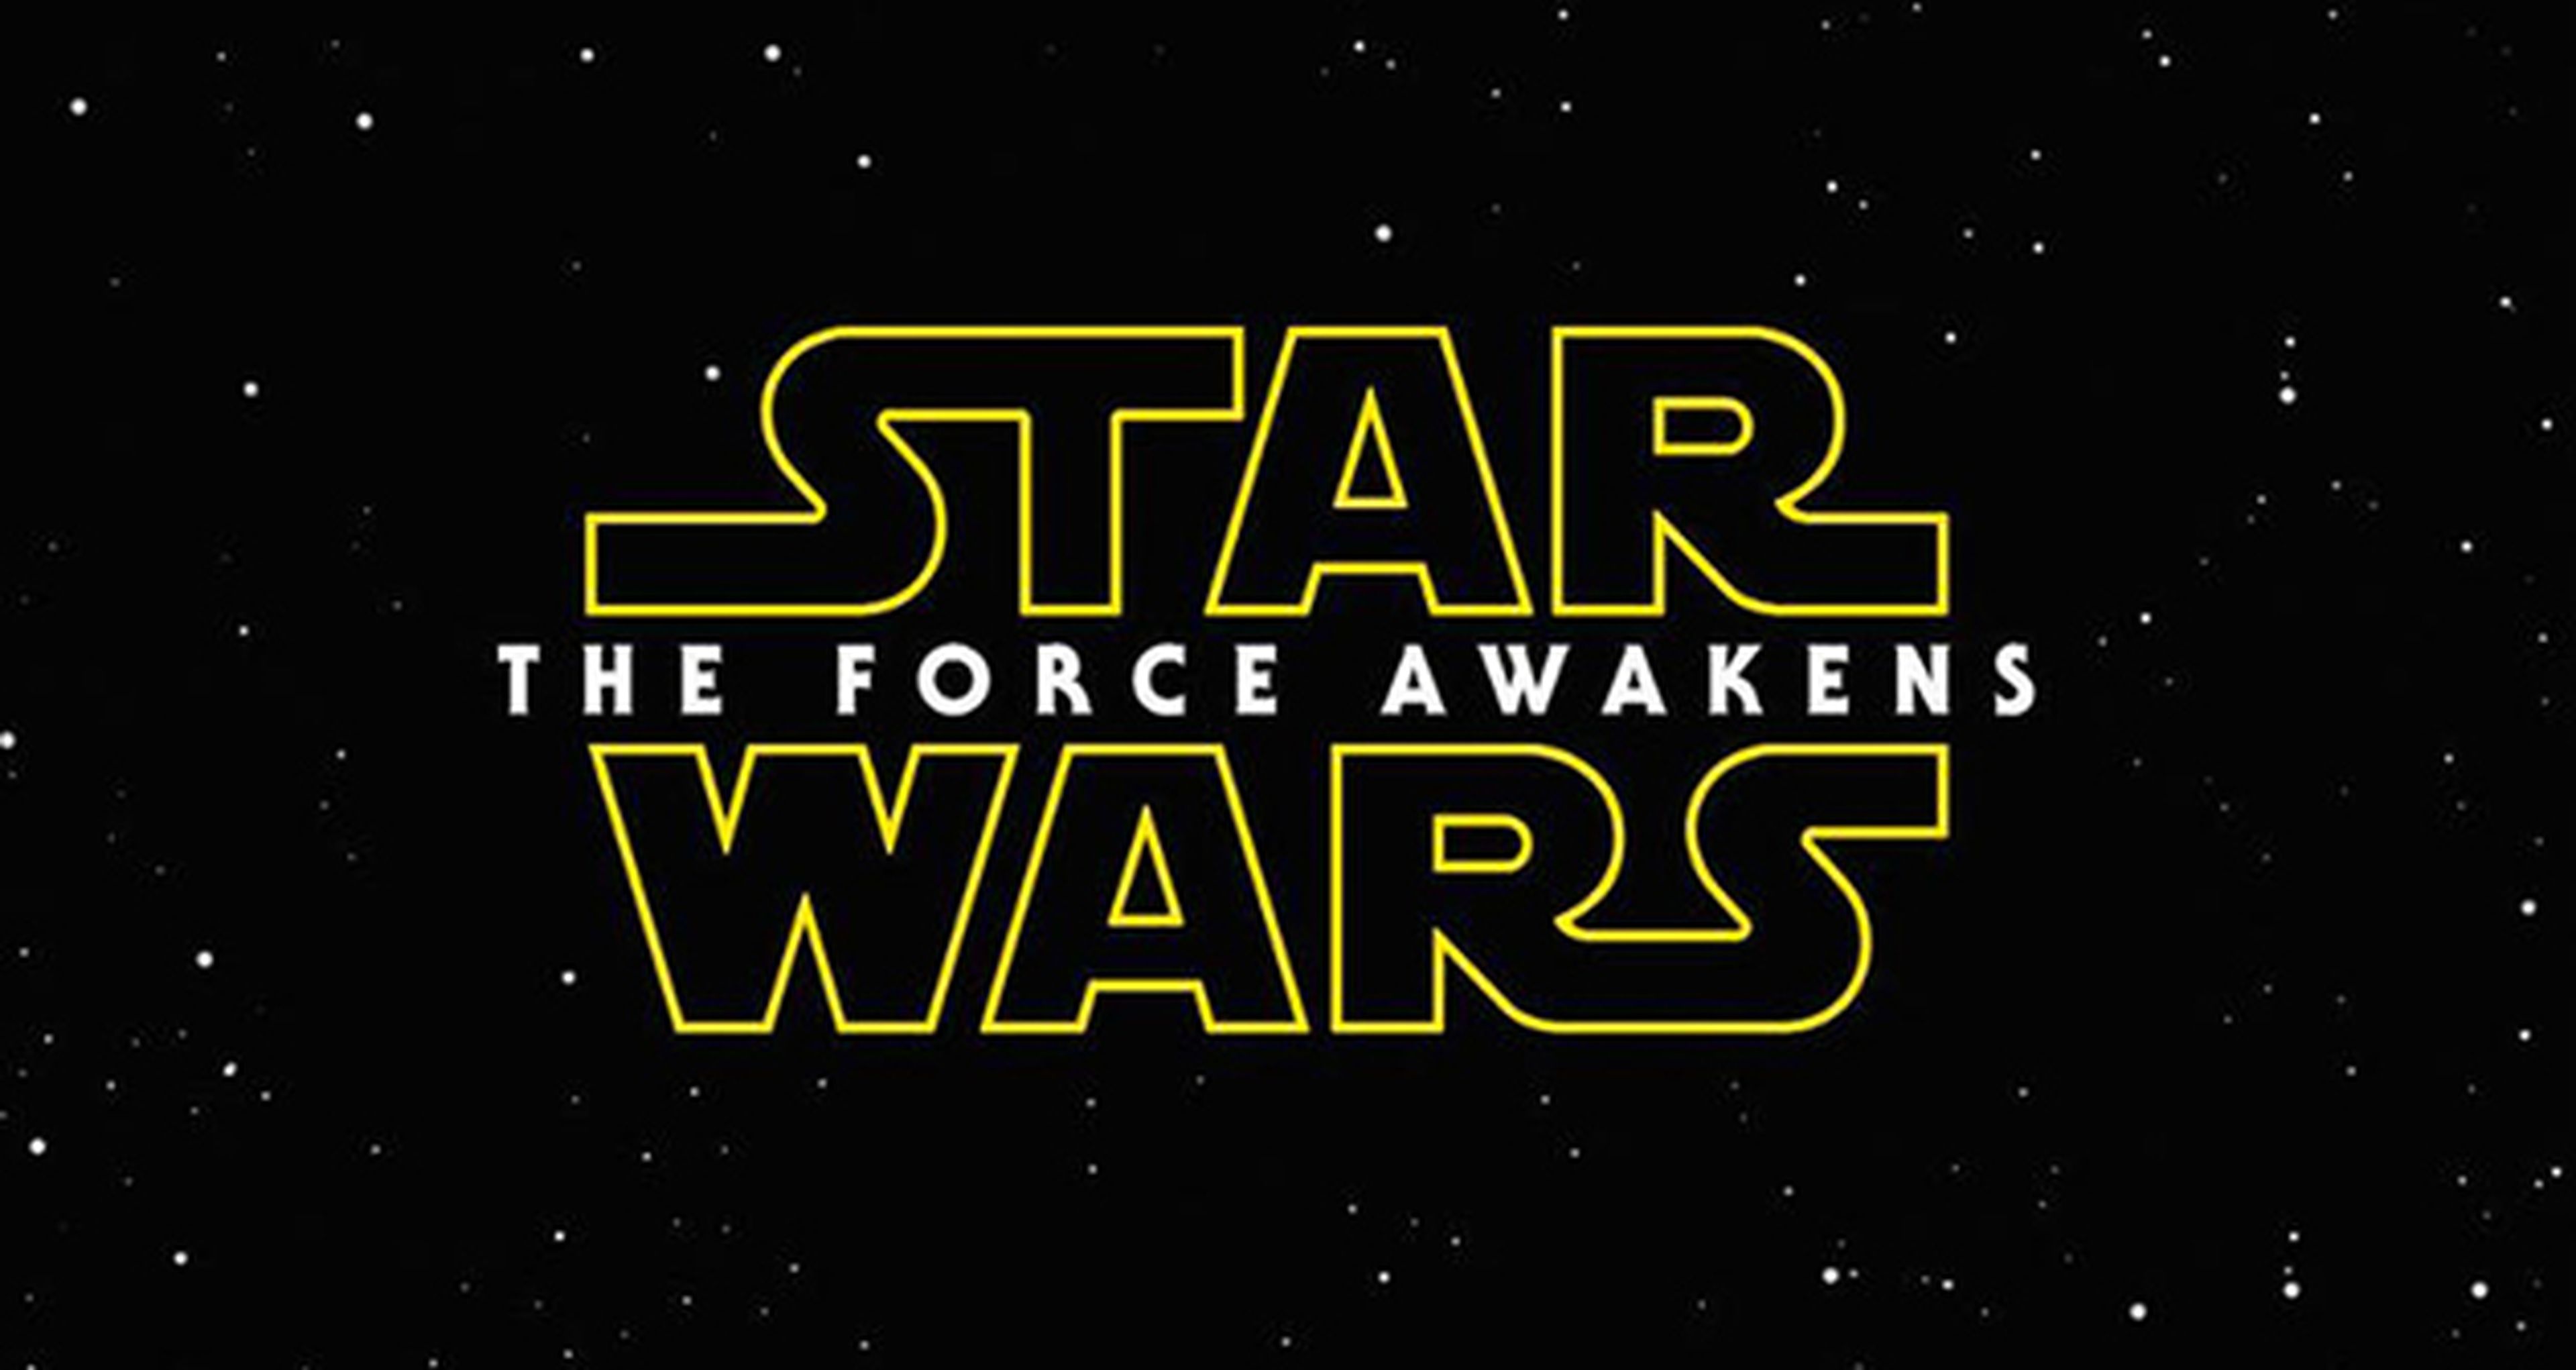 Primer metraje del tráiler de Star Wars VII: The Force Awakens